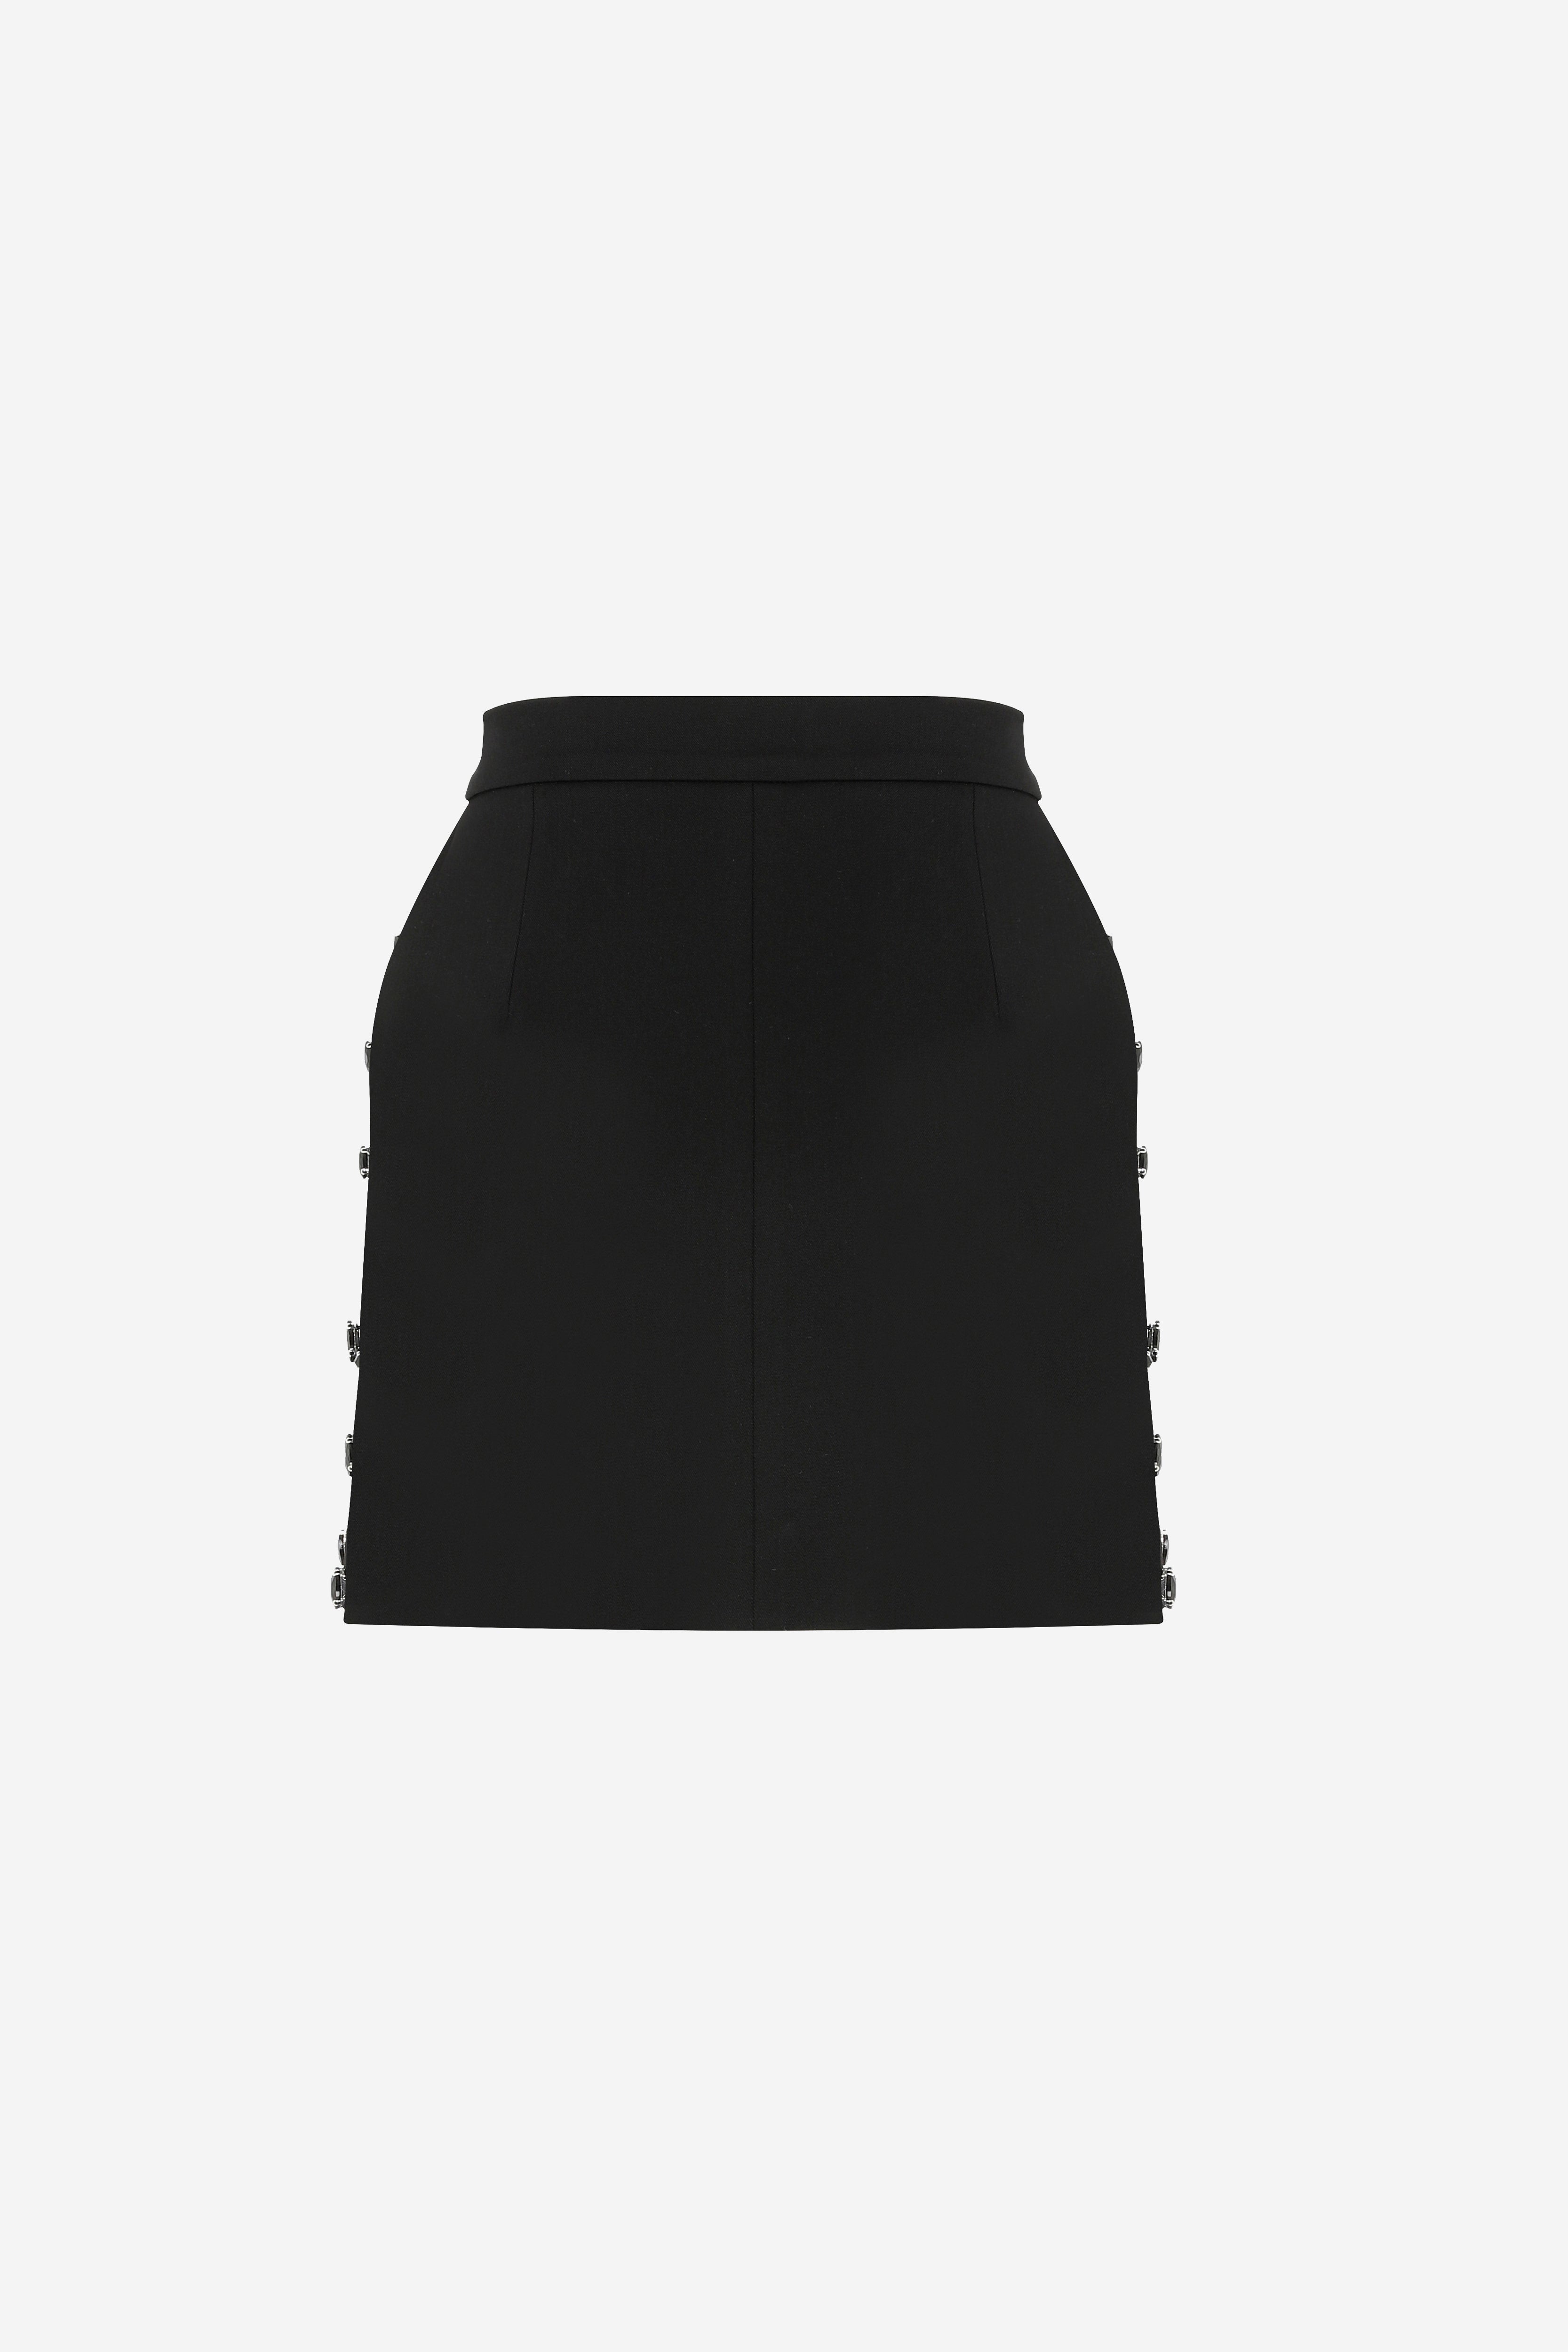 Ilta - Stone Embroidered Mini Skirt